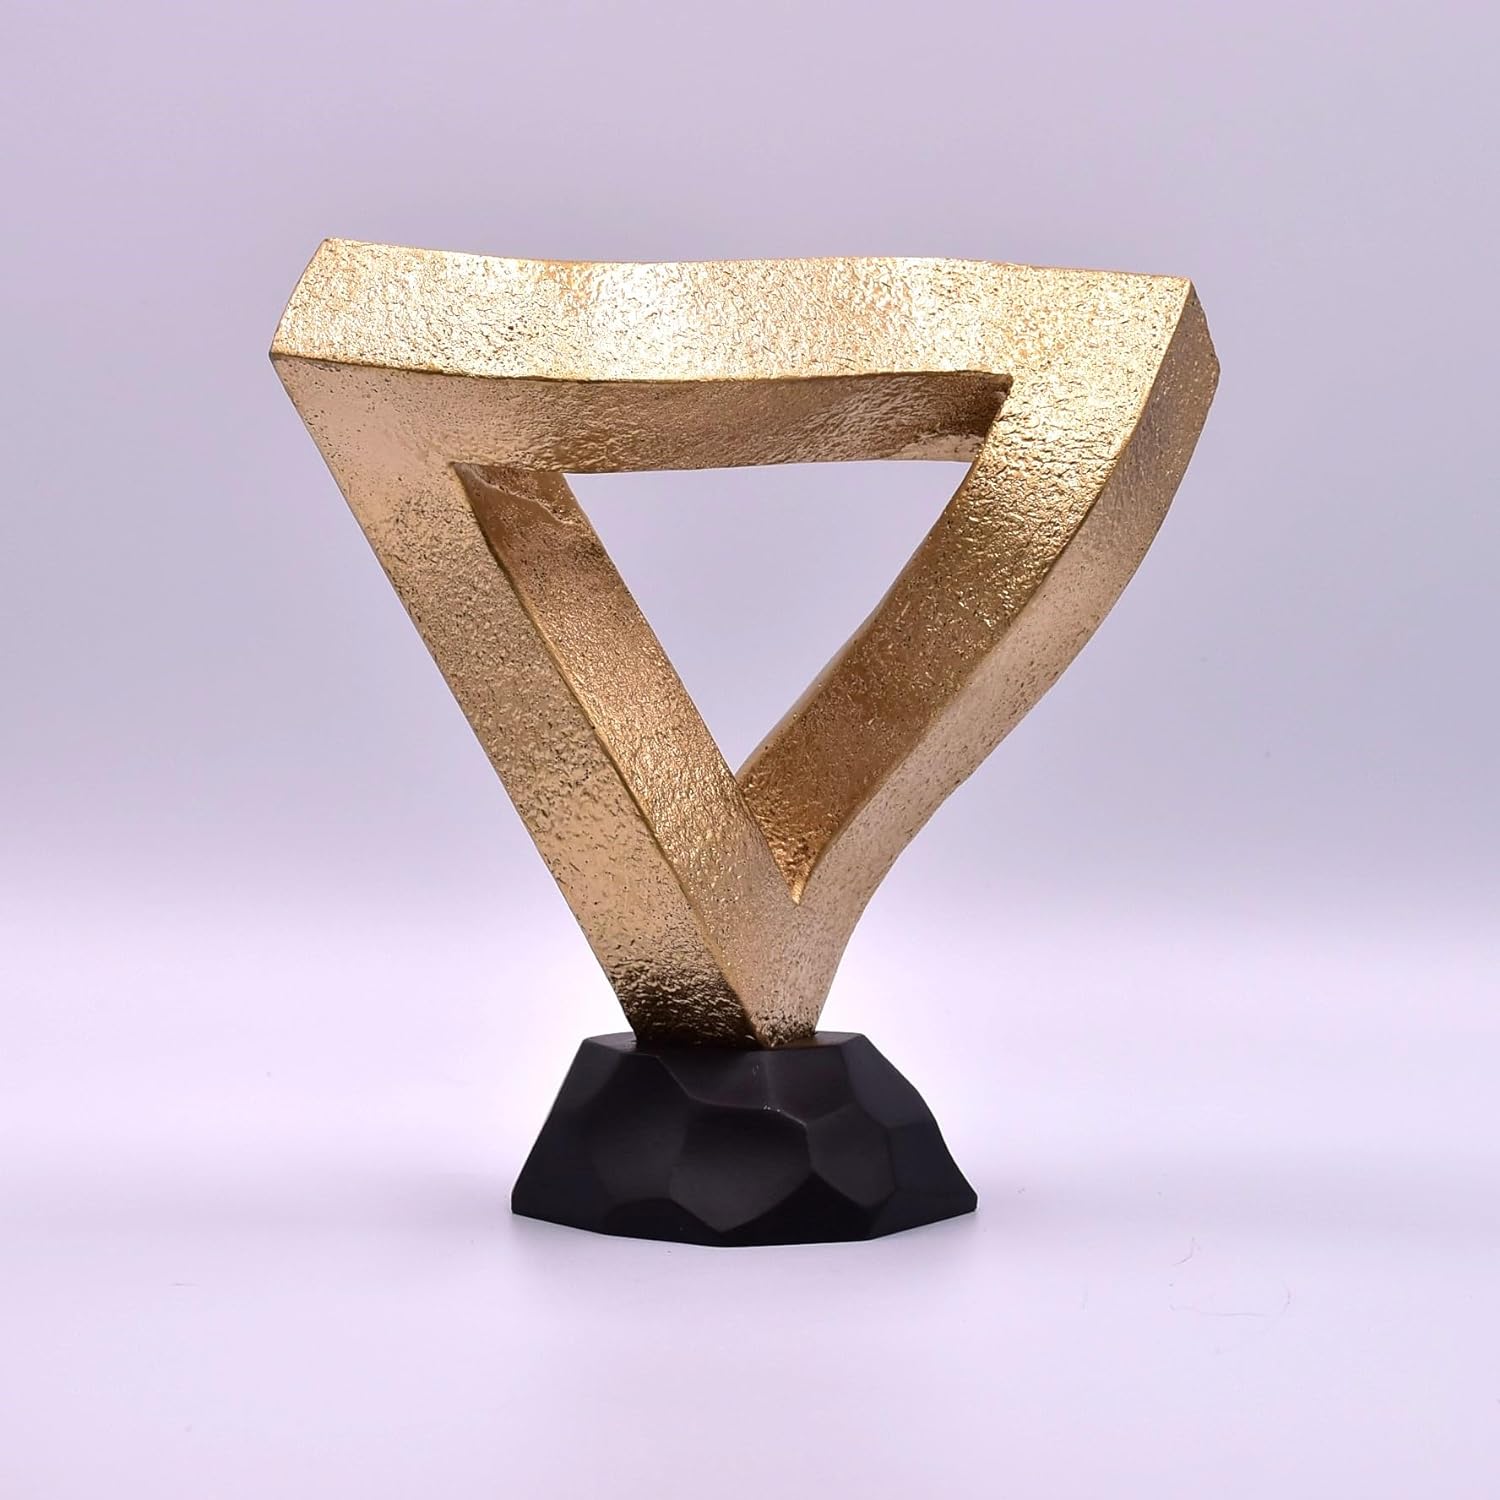 LARETROTIENDA Penrose Triangle Sculpture - Optical Illusion - Impossible Triangle Art